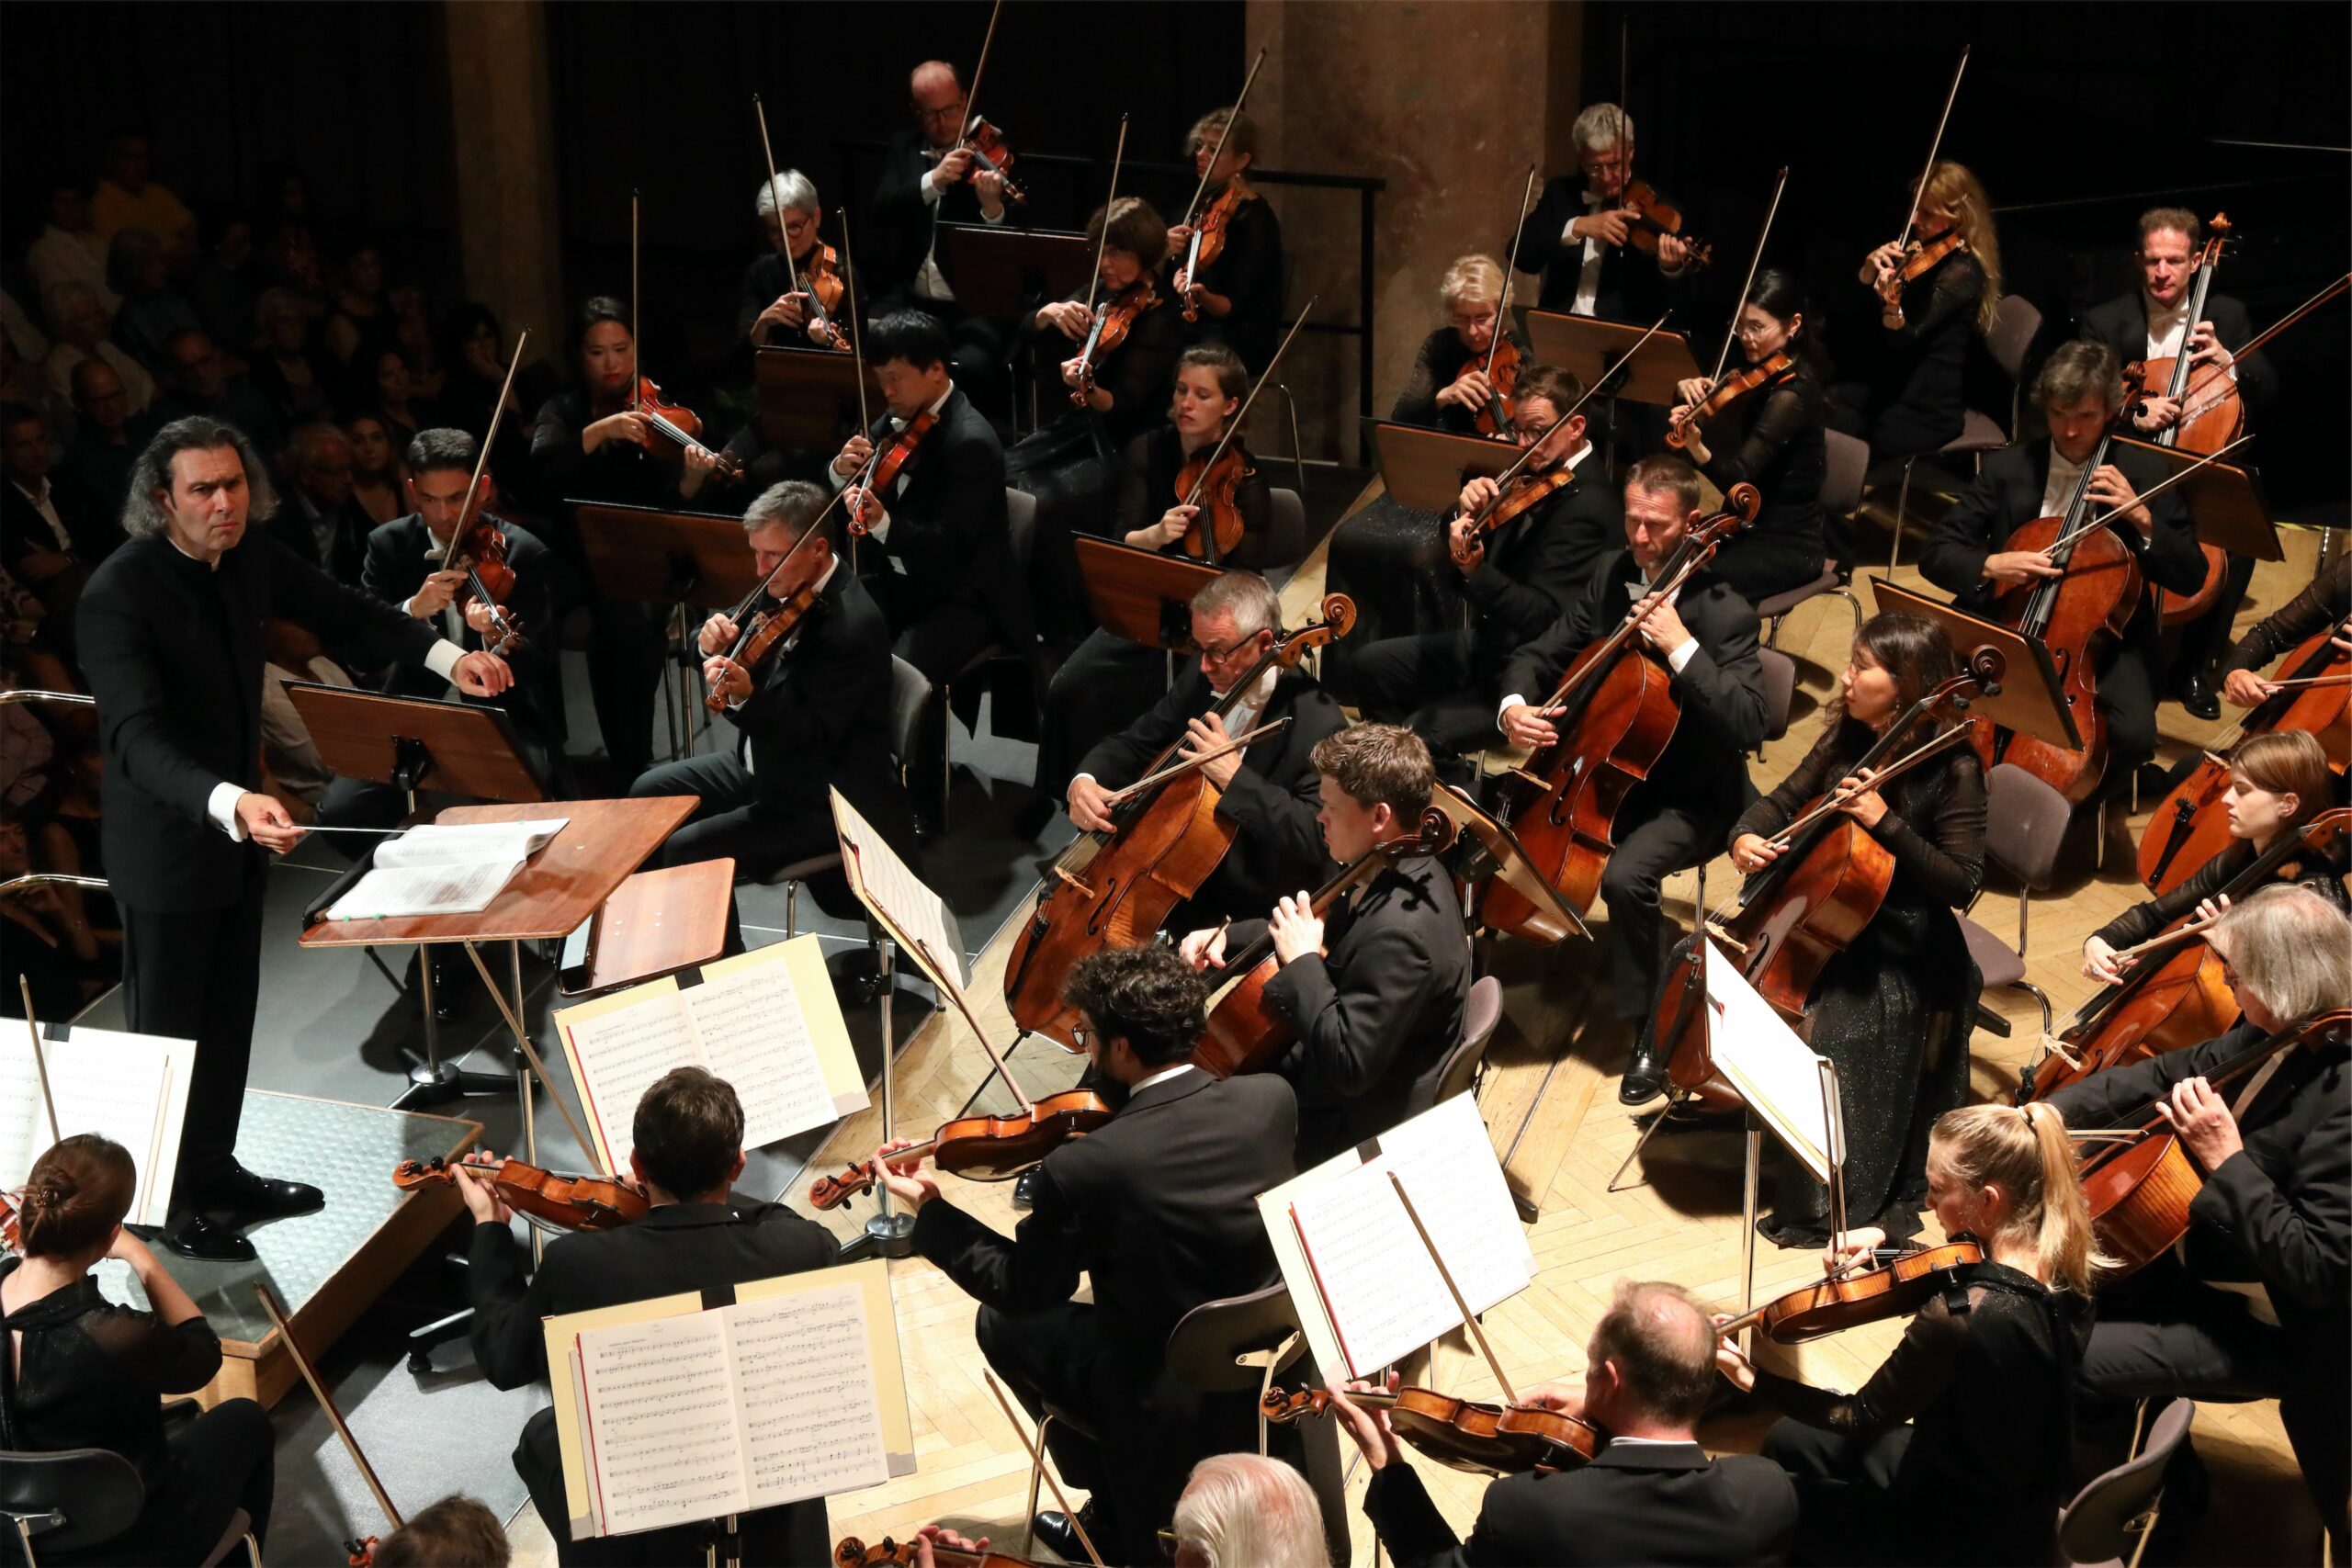 Bayerische Staatsoper, Bayerische Staatsorchester, tour, Europatournee, Merano, live, performance, arts, culture, classical, music